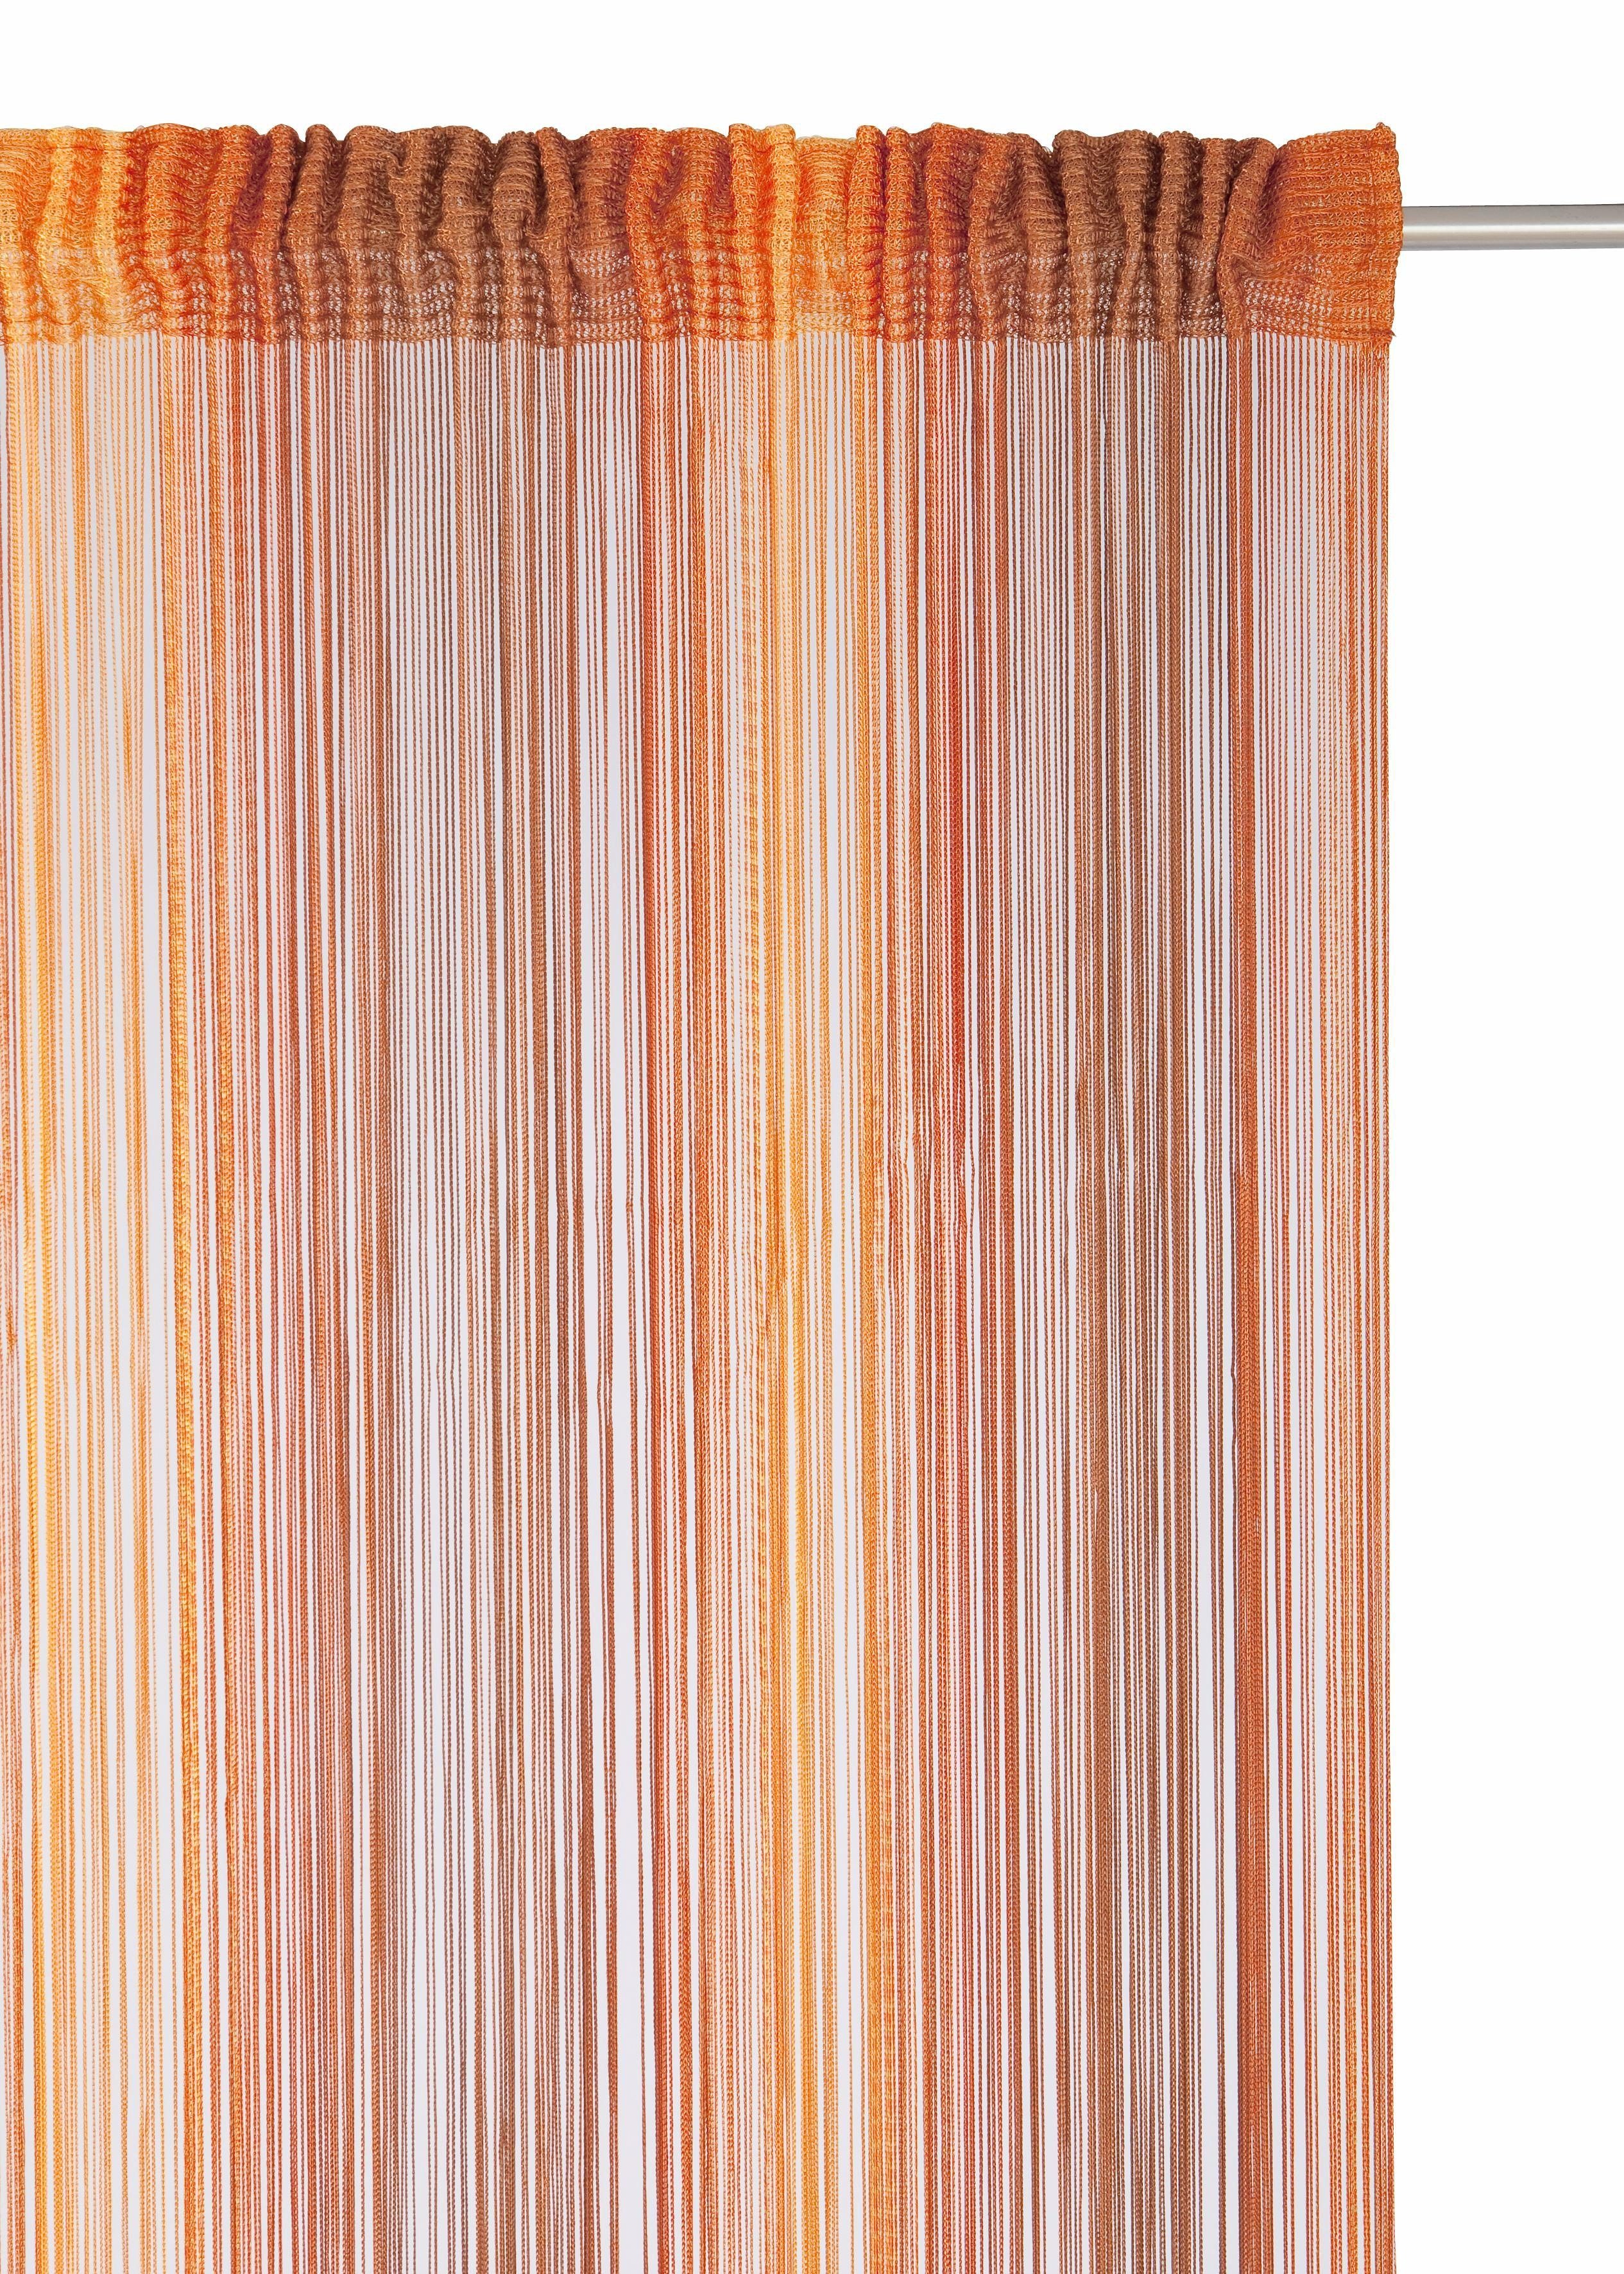 Fadenvorhang Rebecca, Weckbrodt, orange/terra (1 Insektenschutz, St), halbtransparent, Multifunktionsband Gardine, kürzbar transparent, Fadengardine